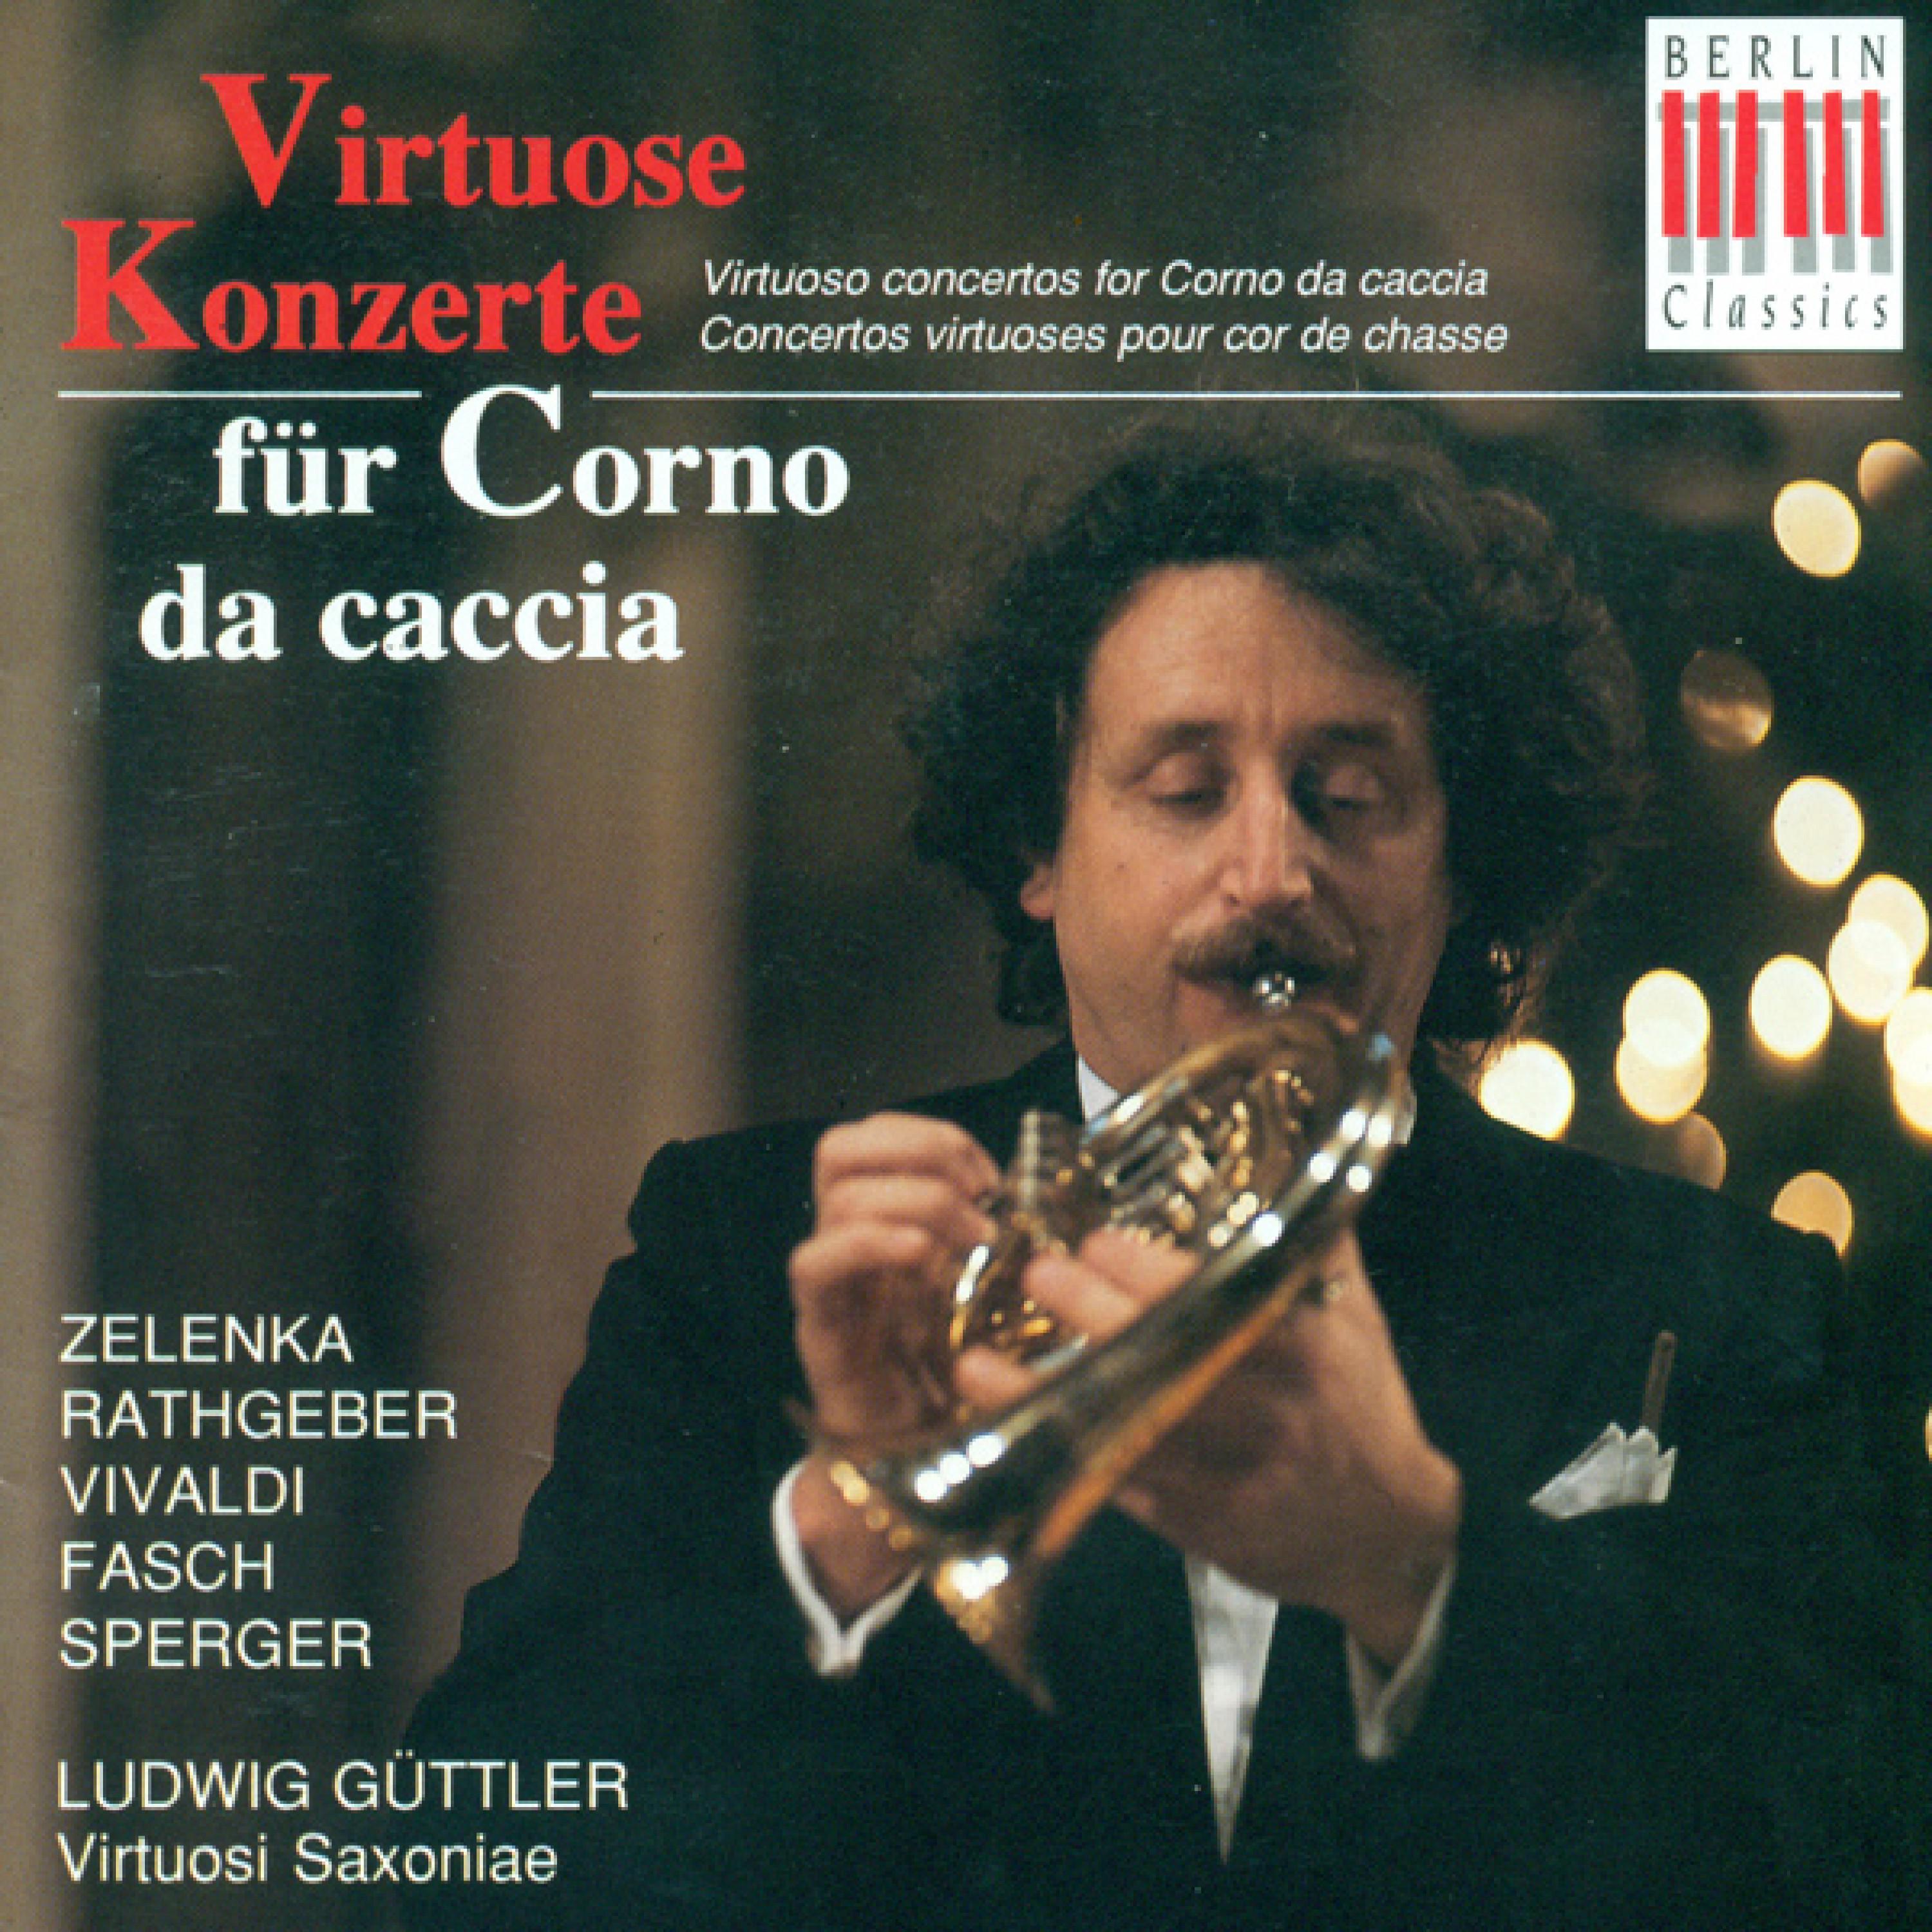 Concerto for 2 Horns in F Major, RV 539: III. Allegro (arranged by M. Fechner)